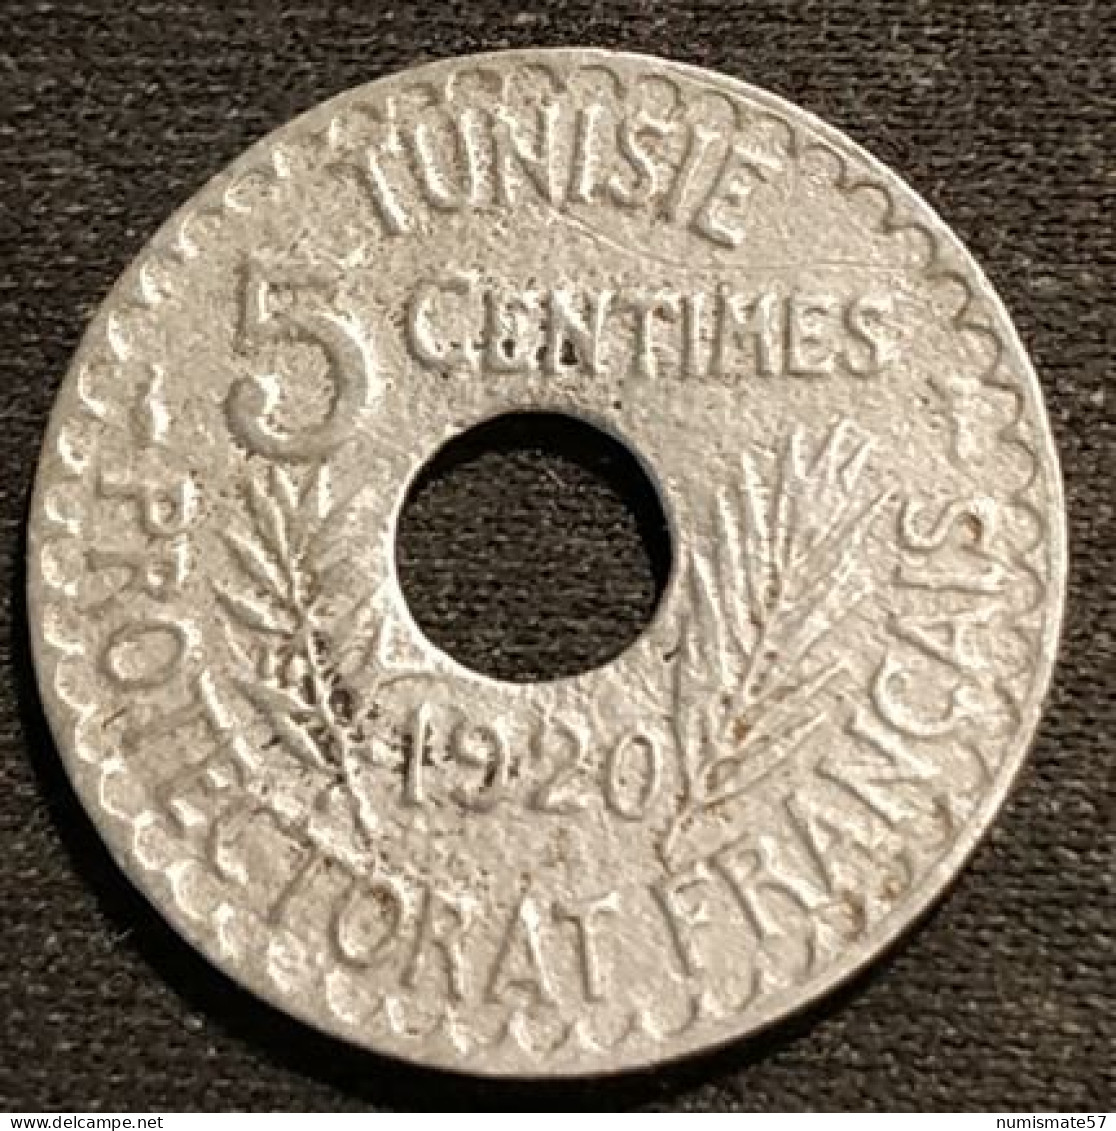 TUNISIE - TUNISIA - 5 CENTIMES 1920 ( 1339 ) - Grand Module - Muhammad Al-Nasir - Protectorat Français - KM 242 - Túnez